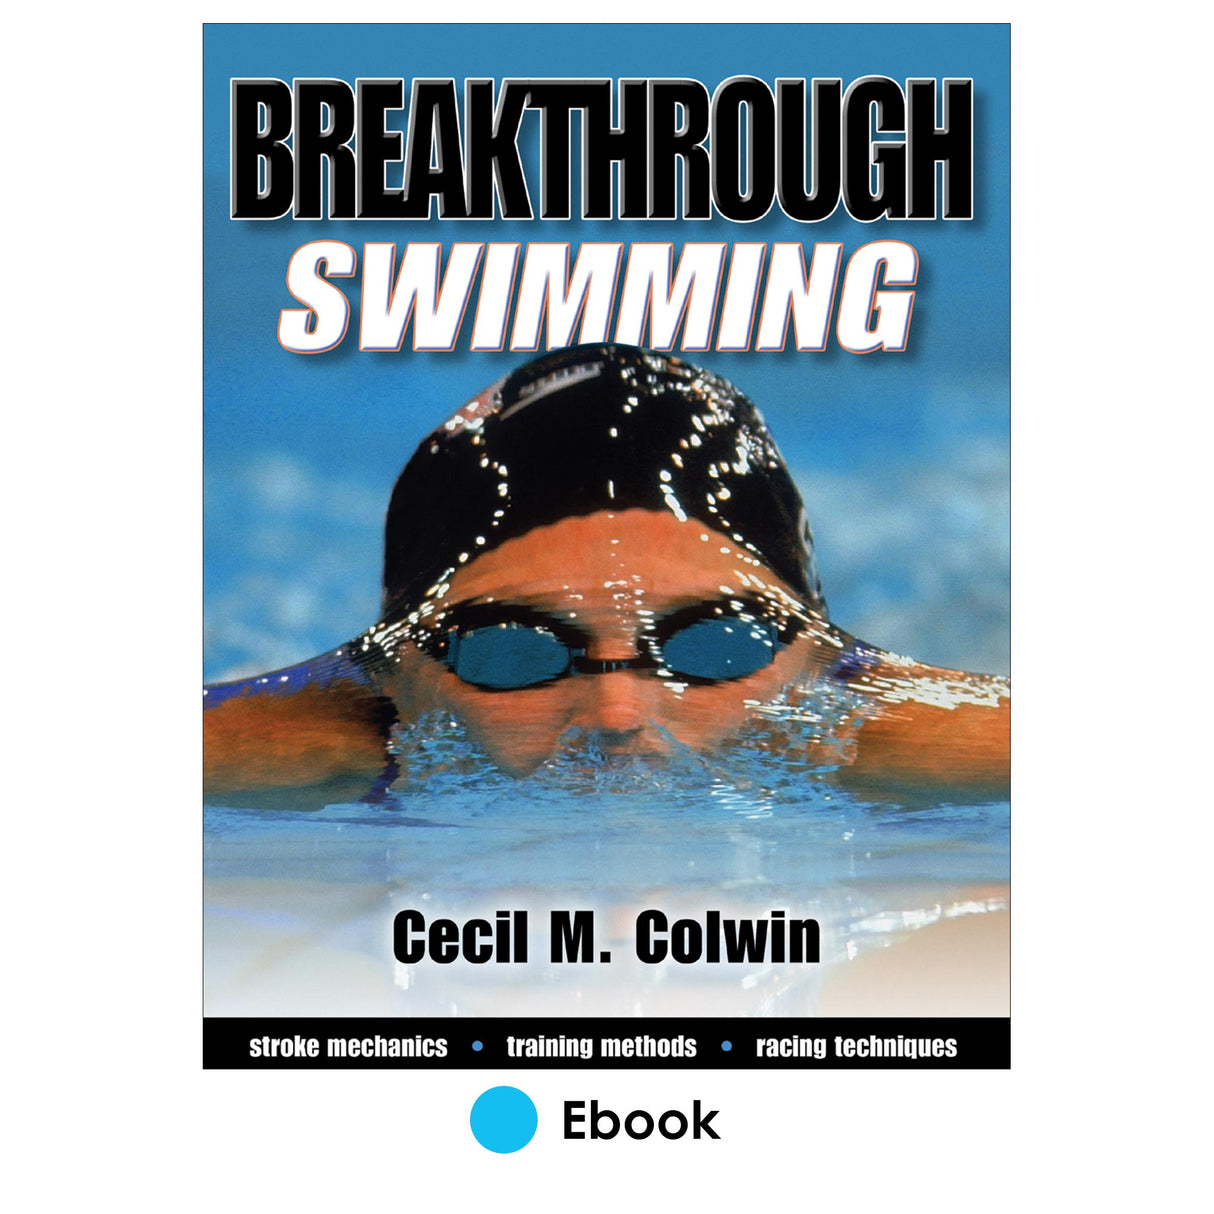 Breakthrough Swimming PDF